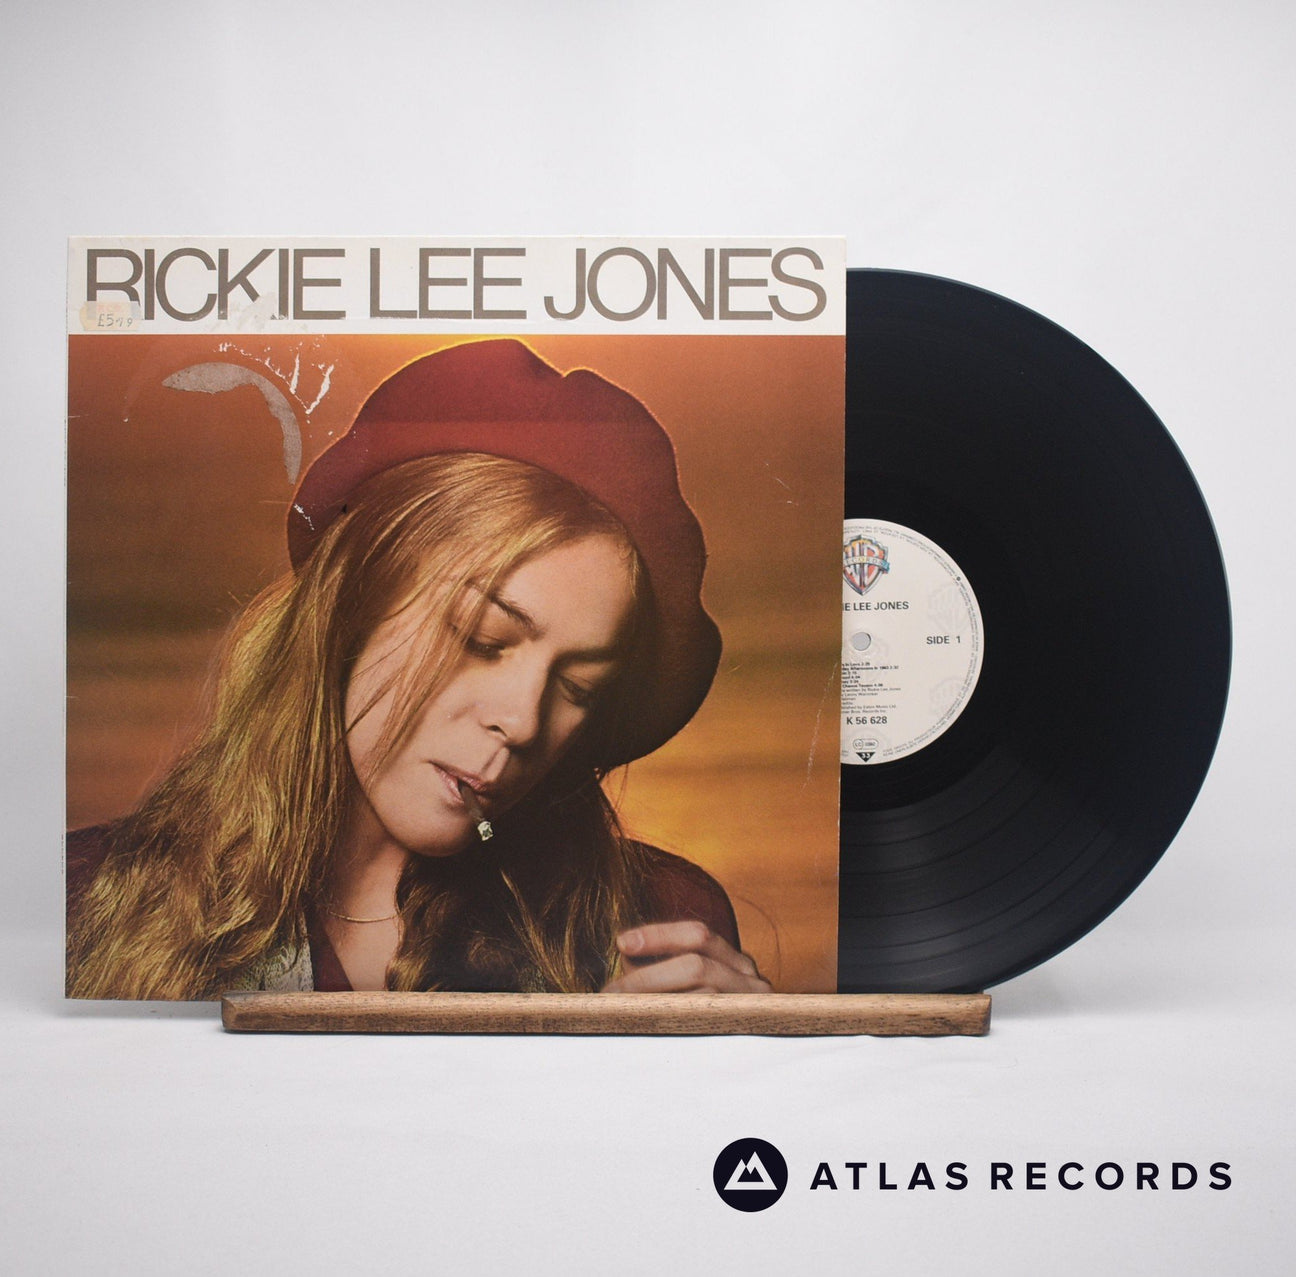 Rickie Lee Jones Rickie Lee Jones LP Vinyl Record - Front Cover & Record